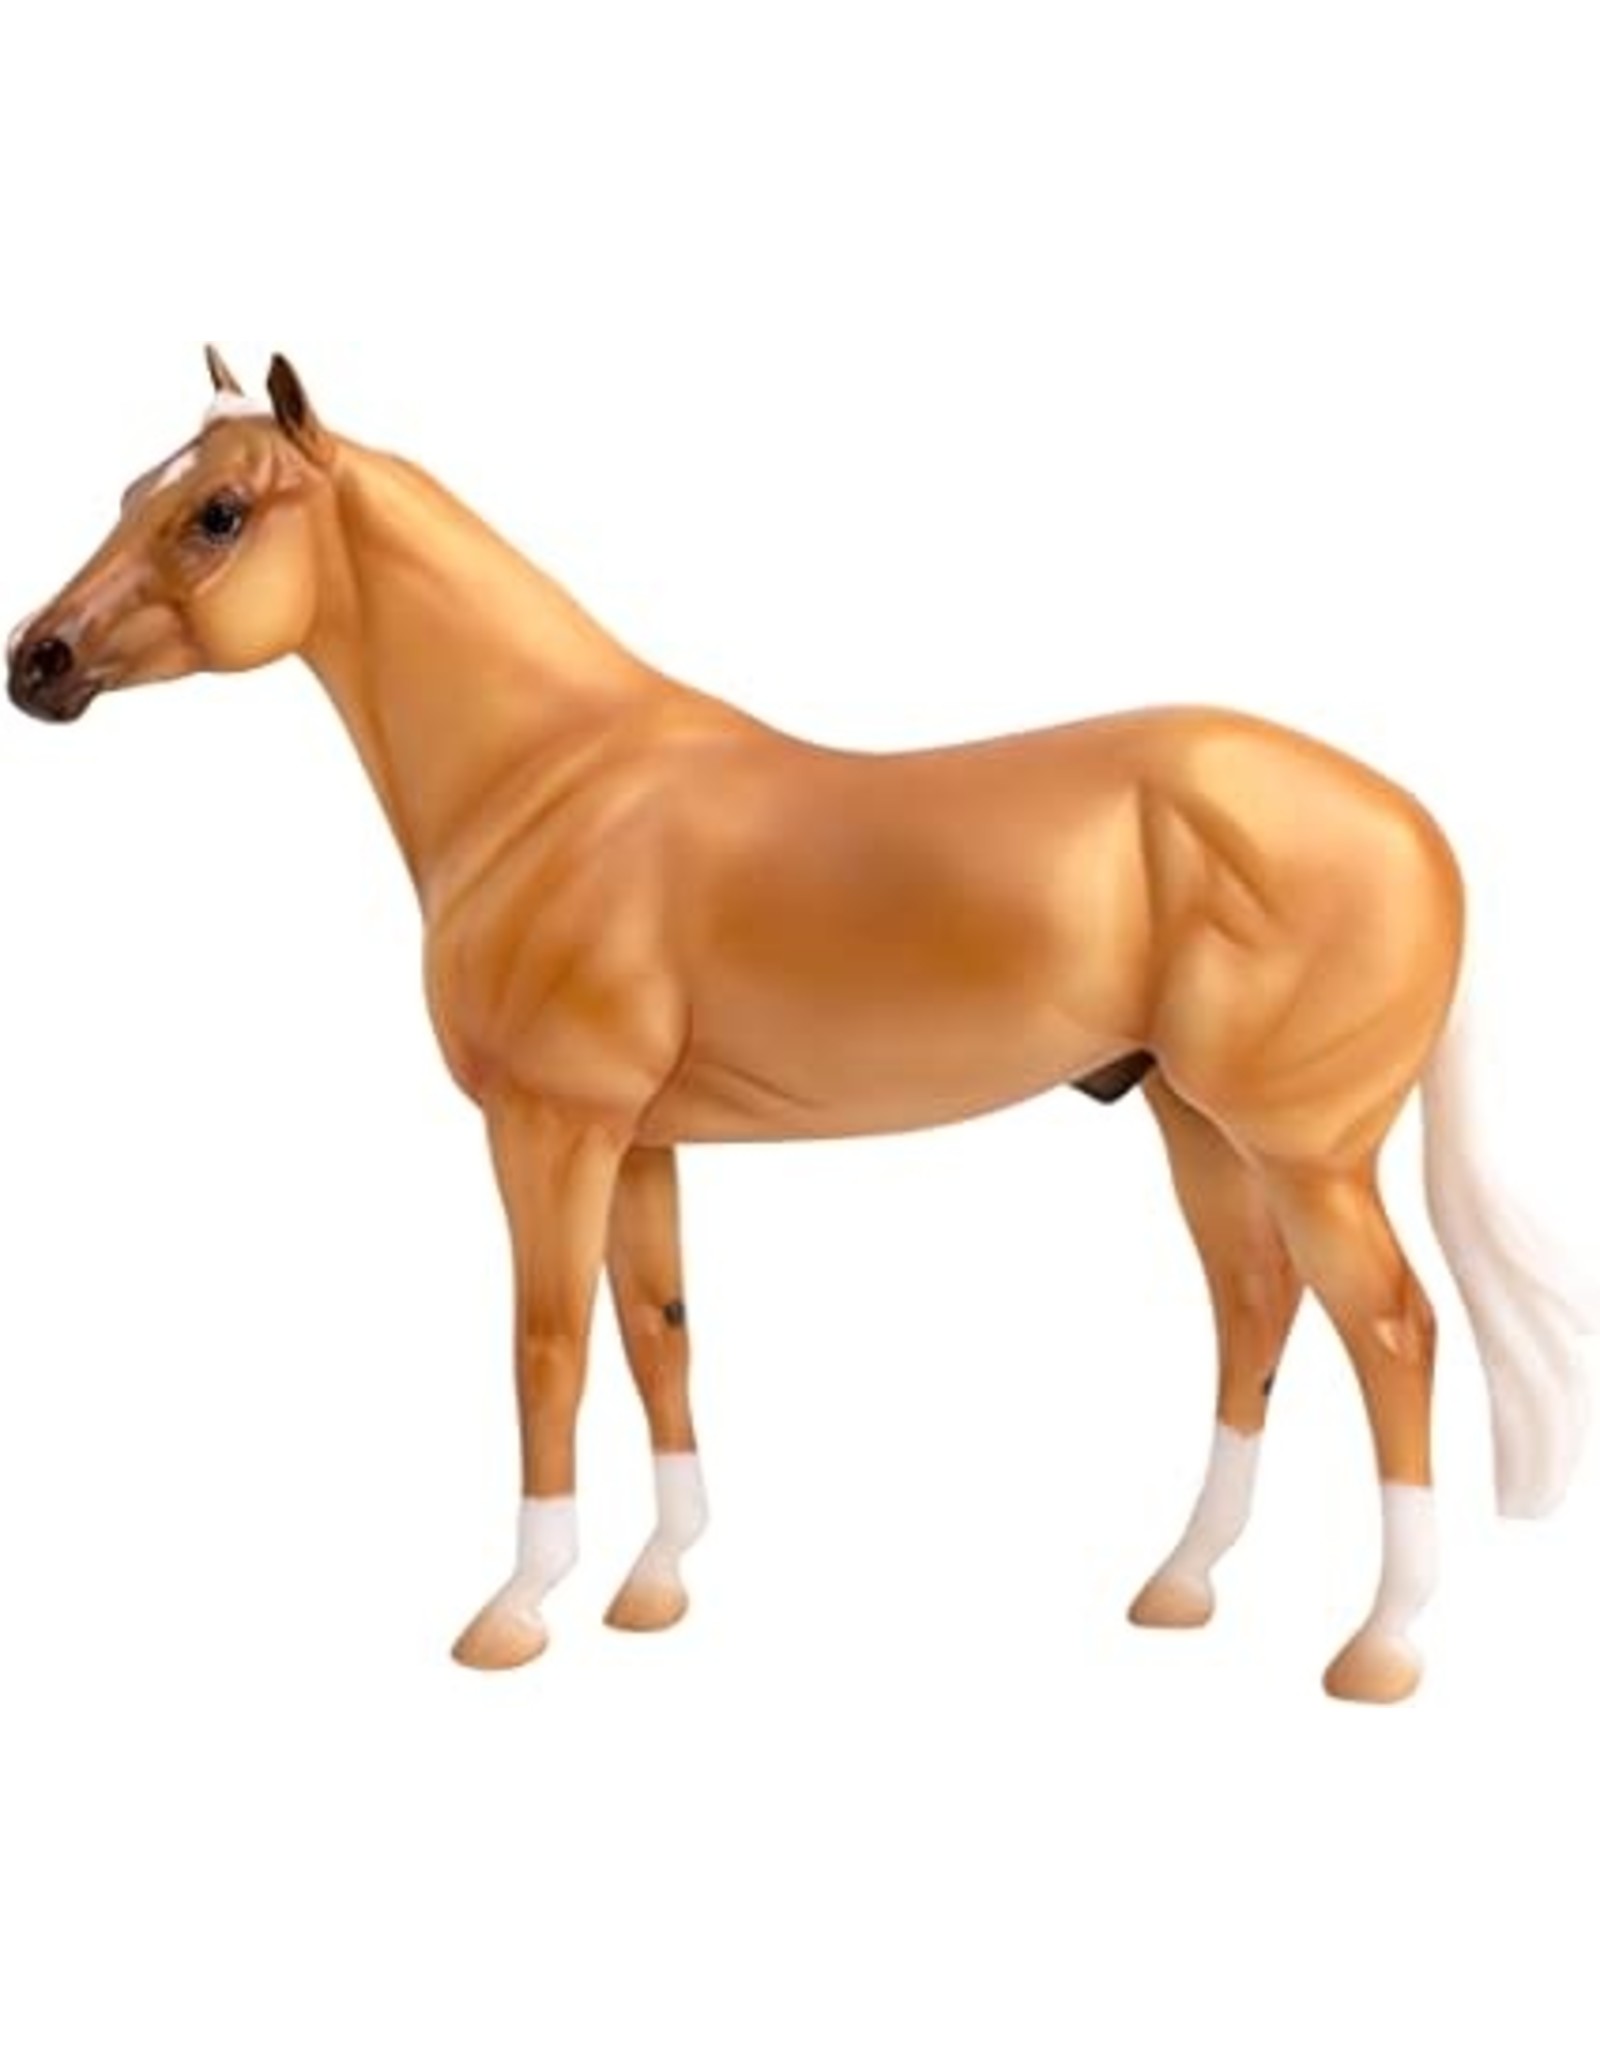 Breyer Ideal Palomino 1836 Model Horse